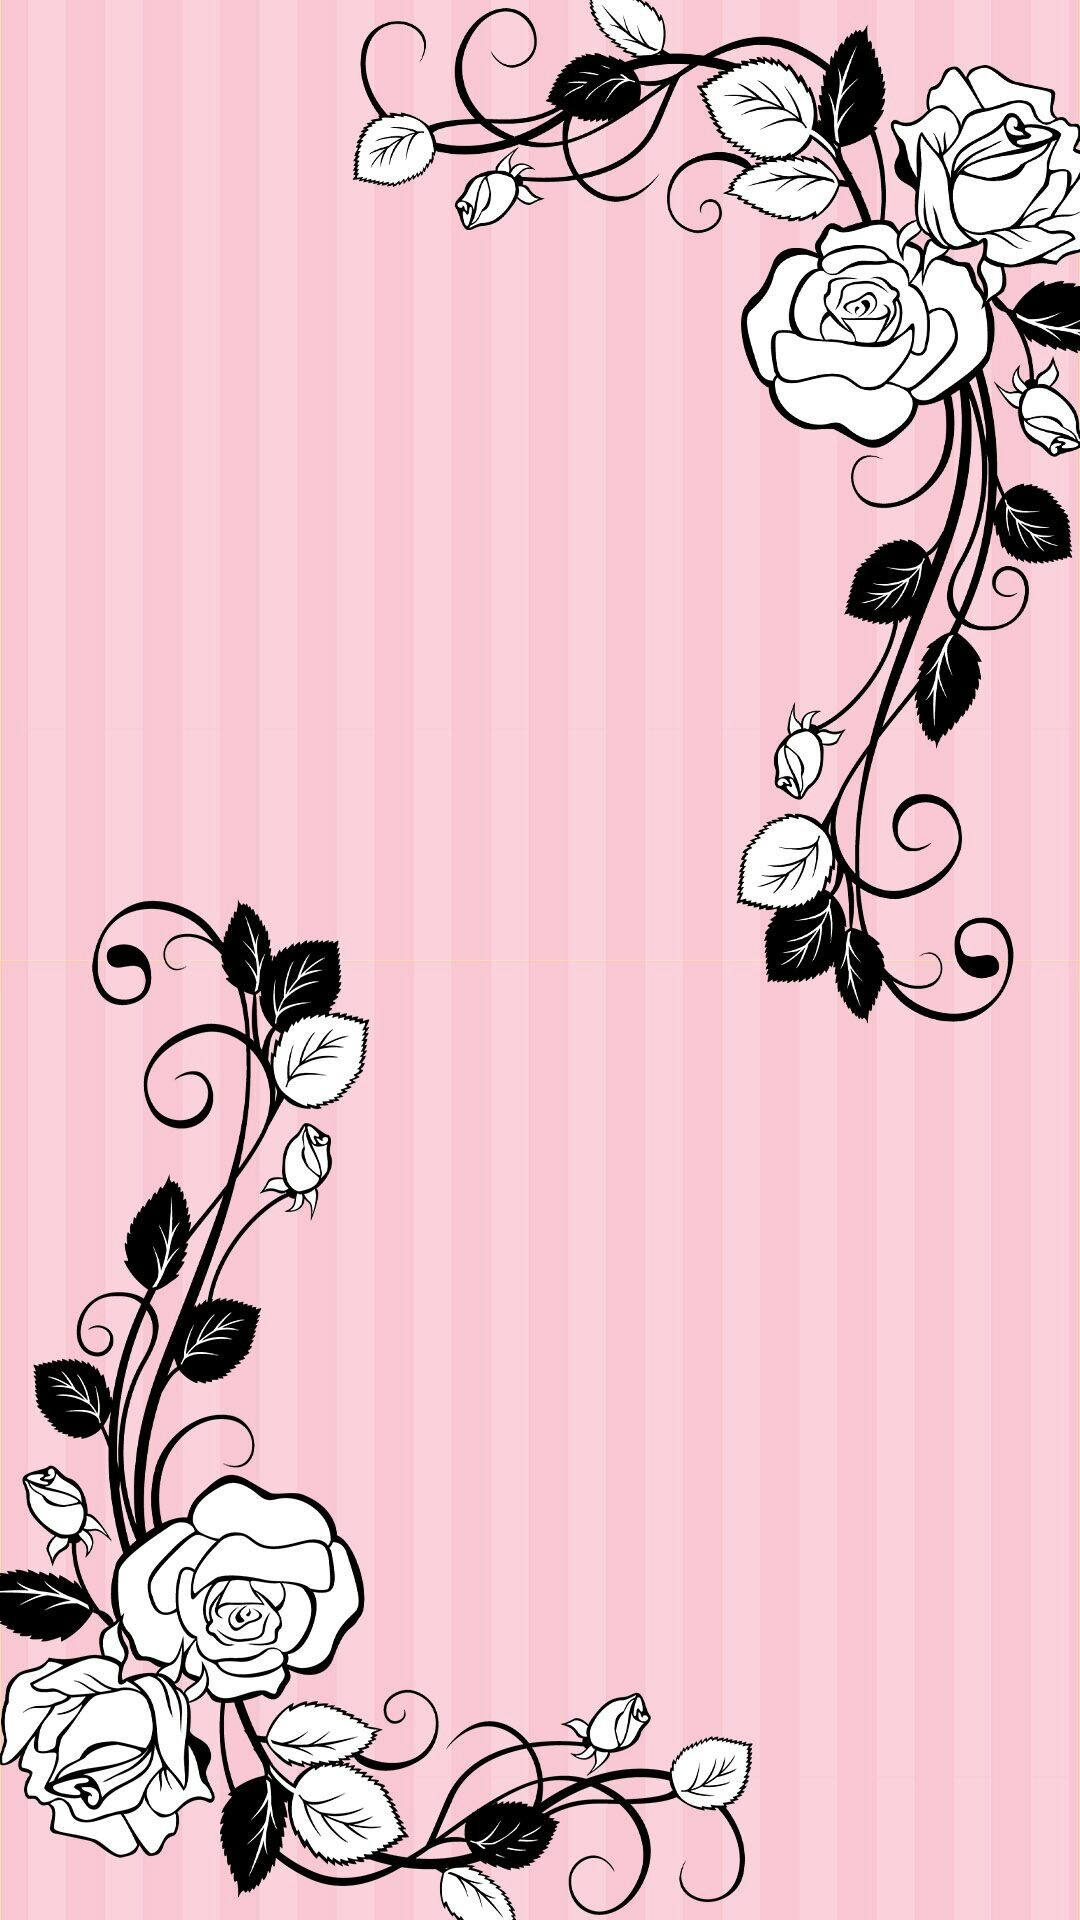 Wallpaper Hello Kitty Gif 43 images 1080x1920